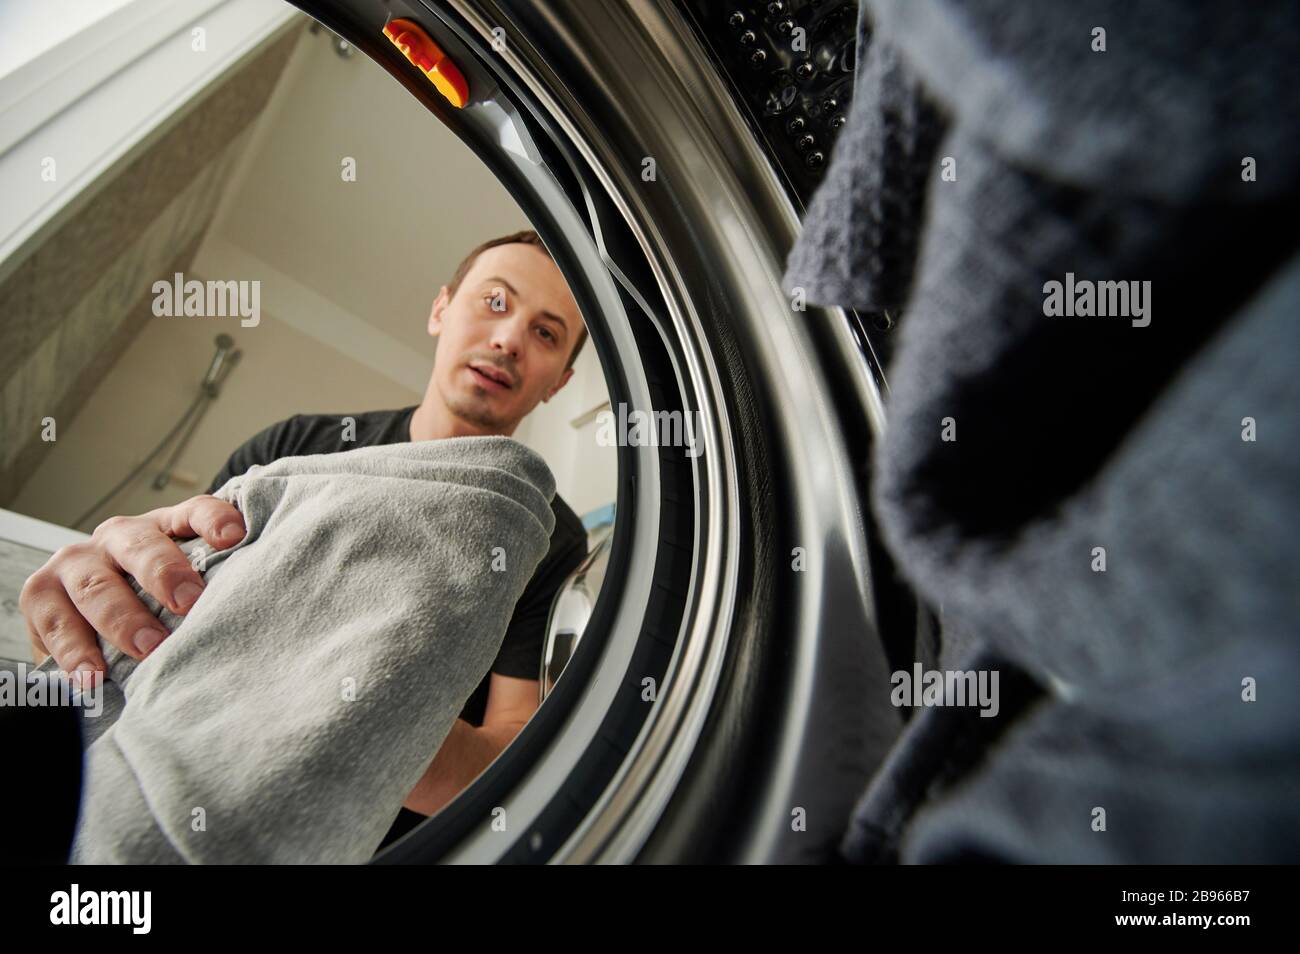 Man loading washing maching view from inside Stock Photo